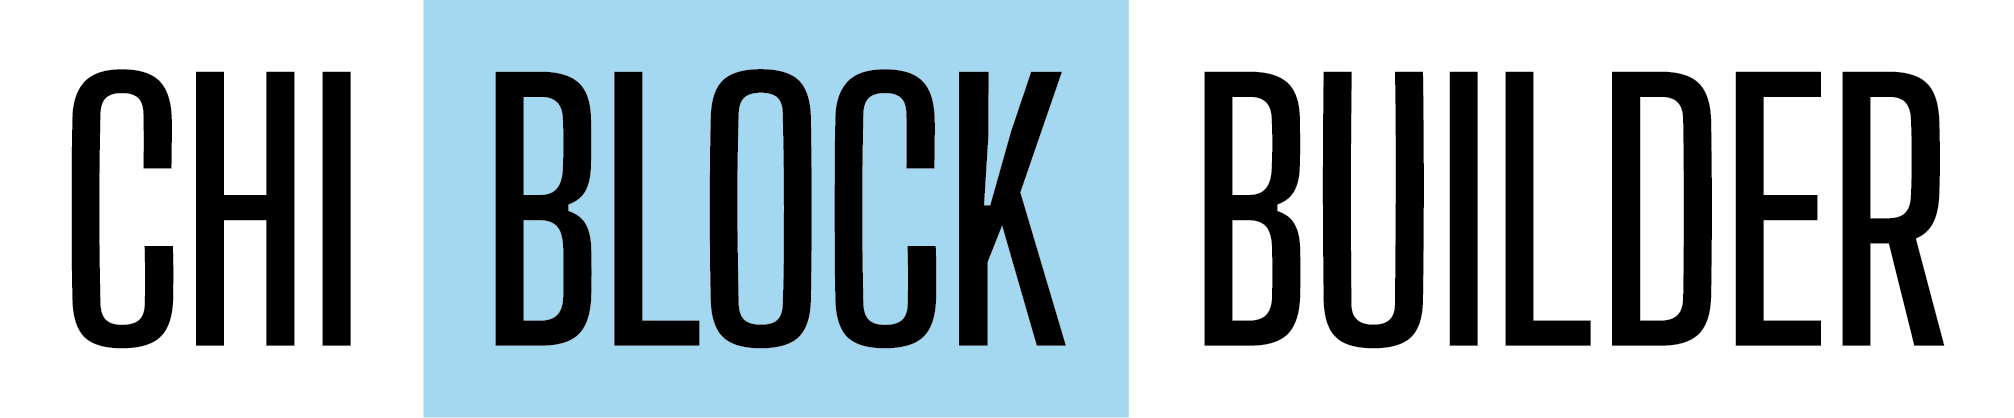 ChiBlockBuilder logo